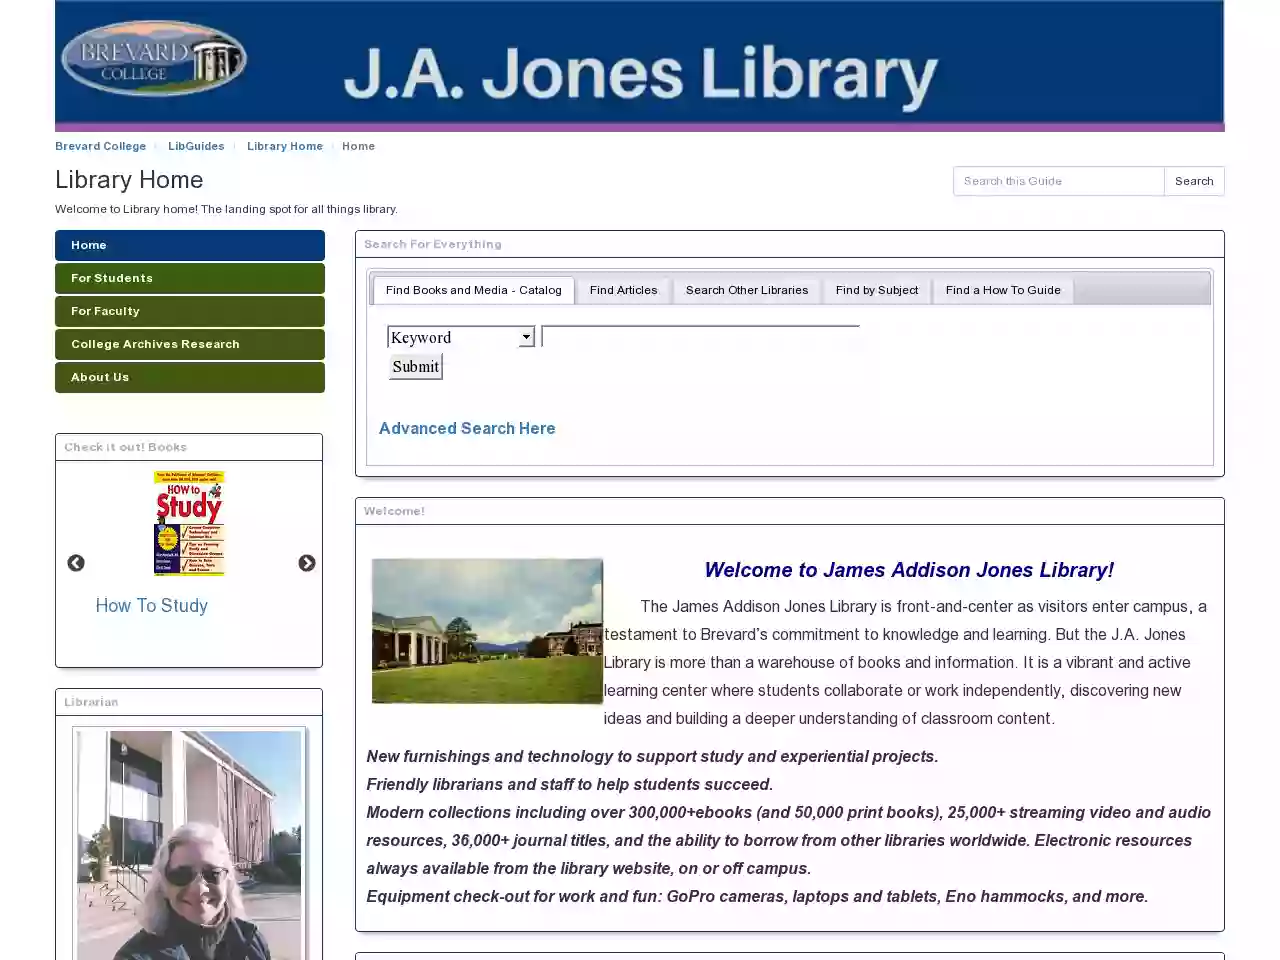 James Addison Jones Library